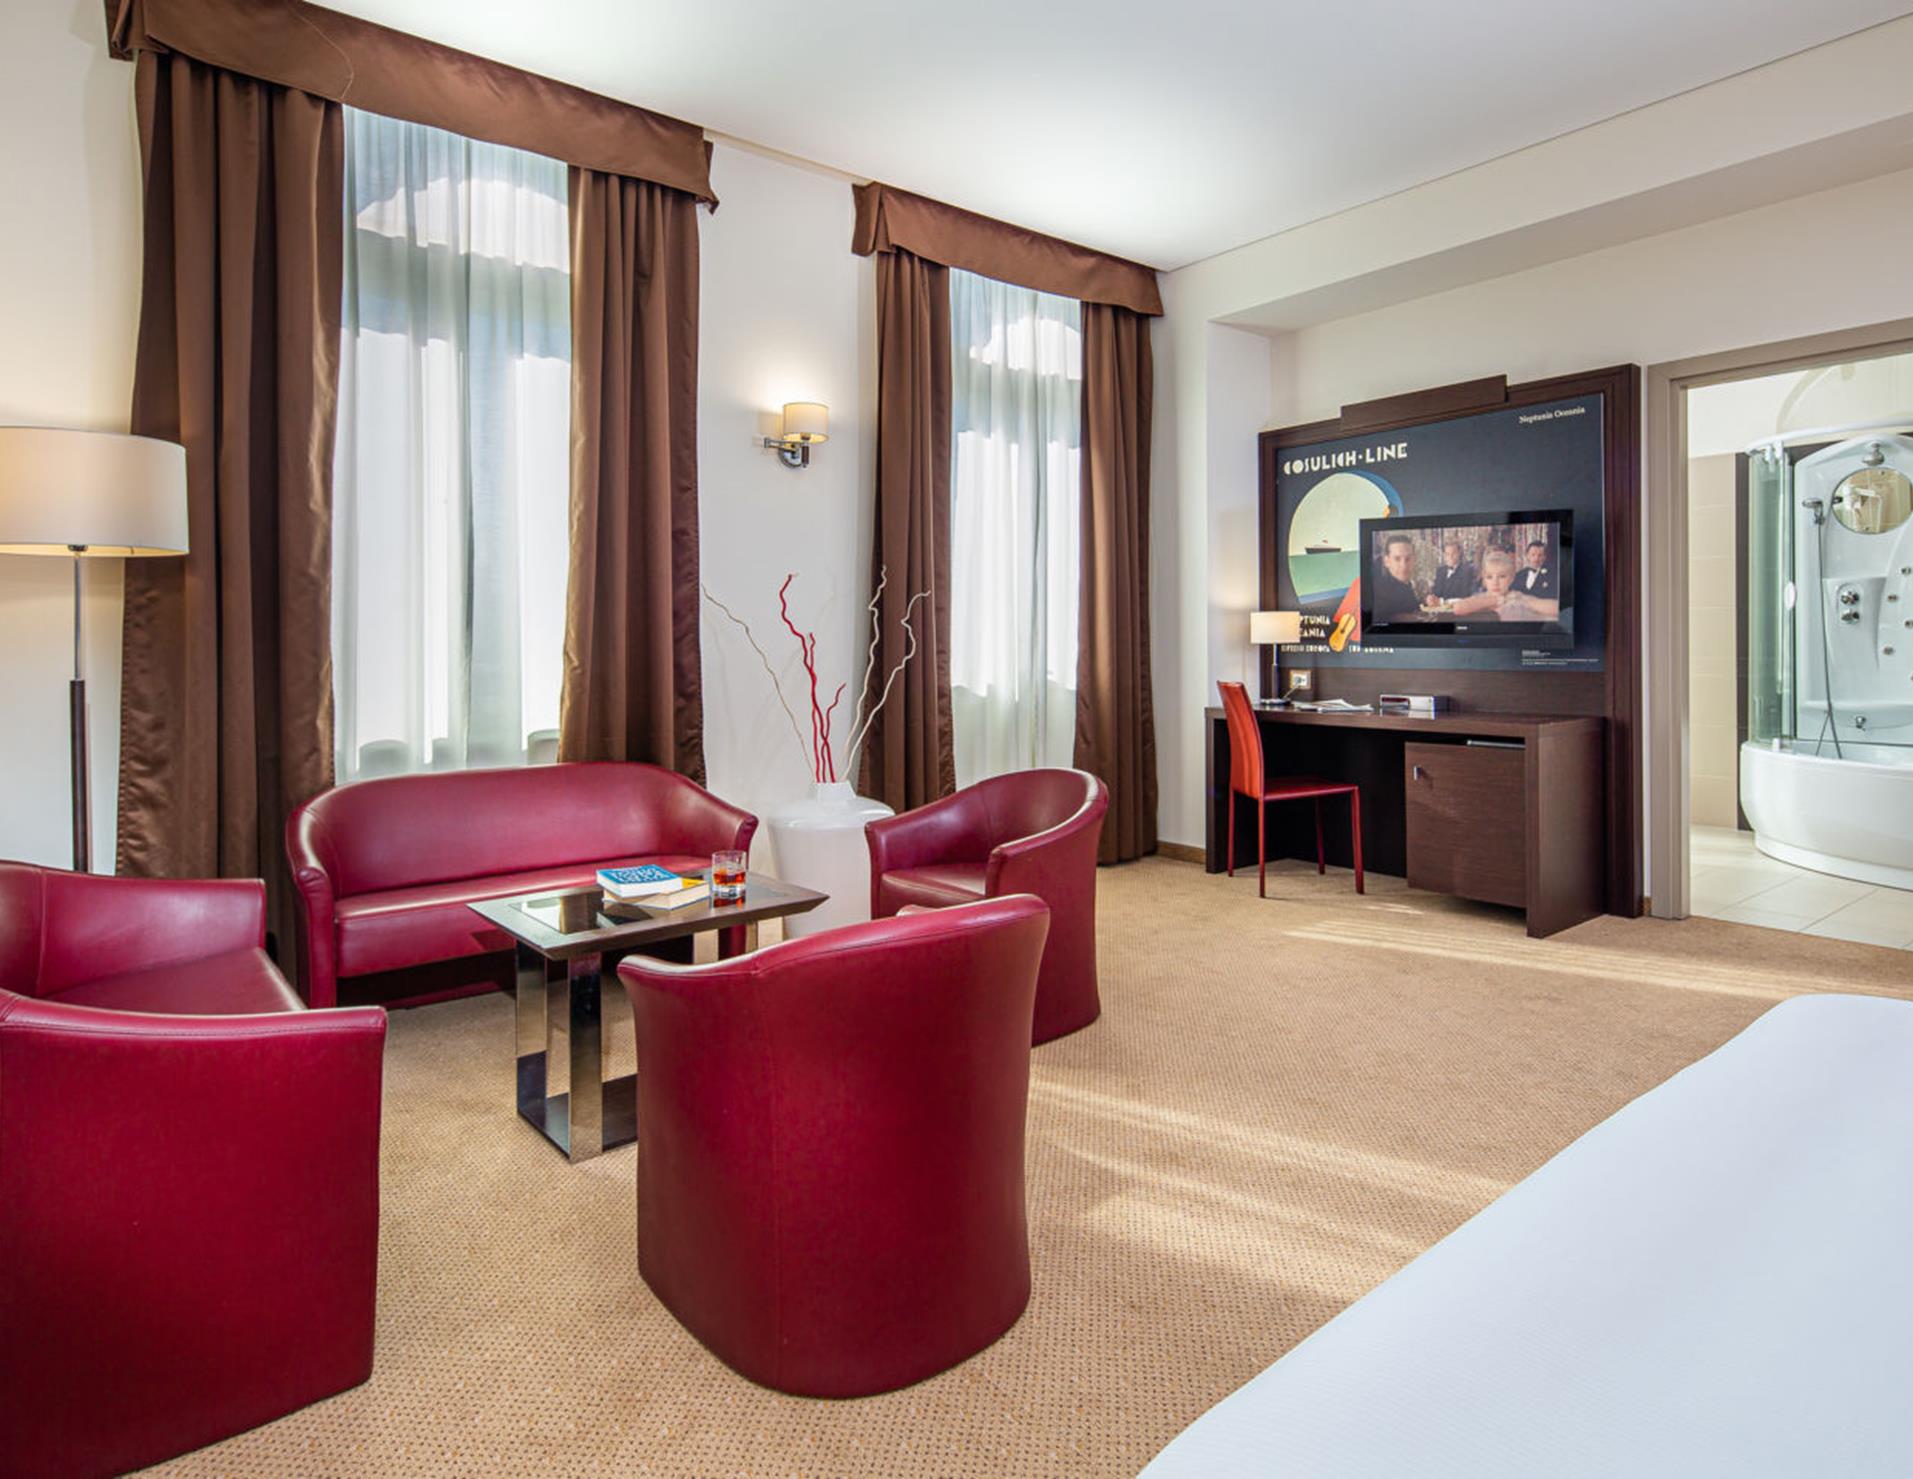 Europalace Hotel - Room 3